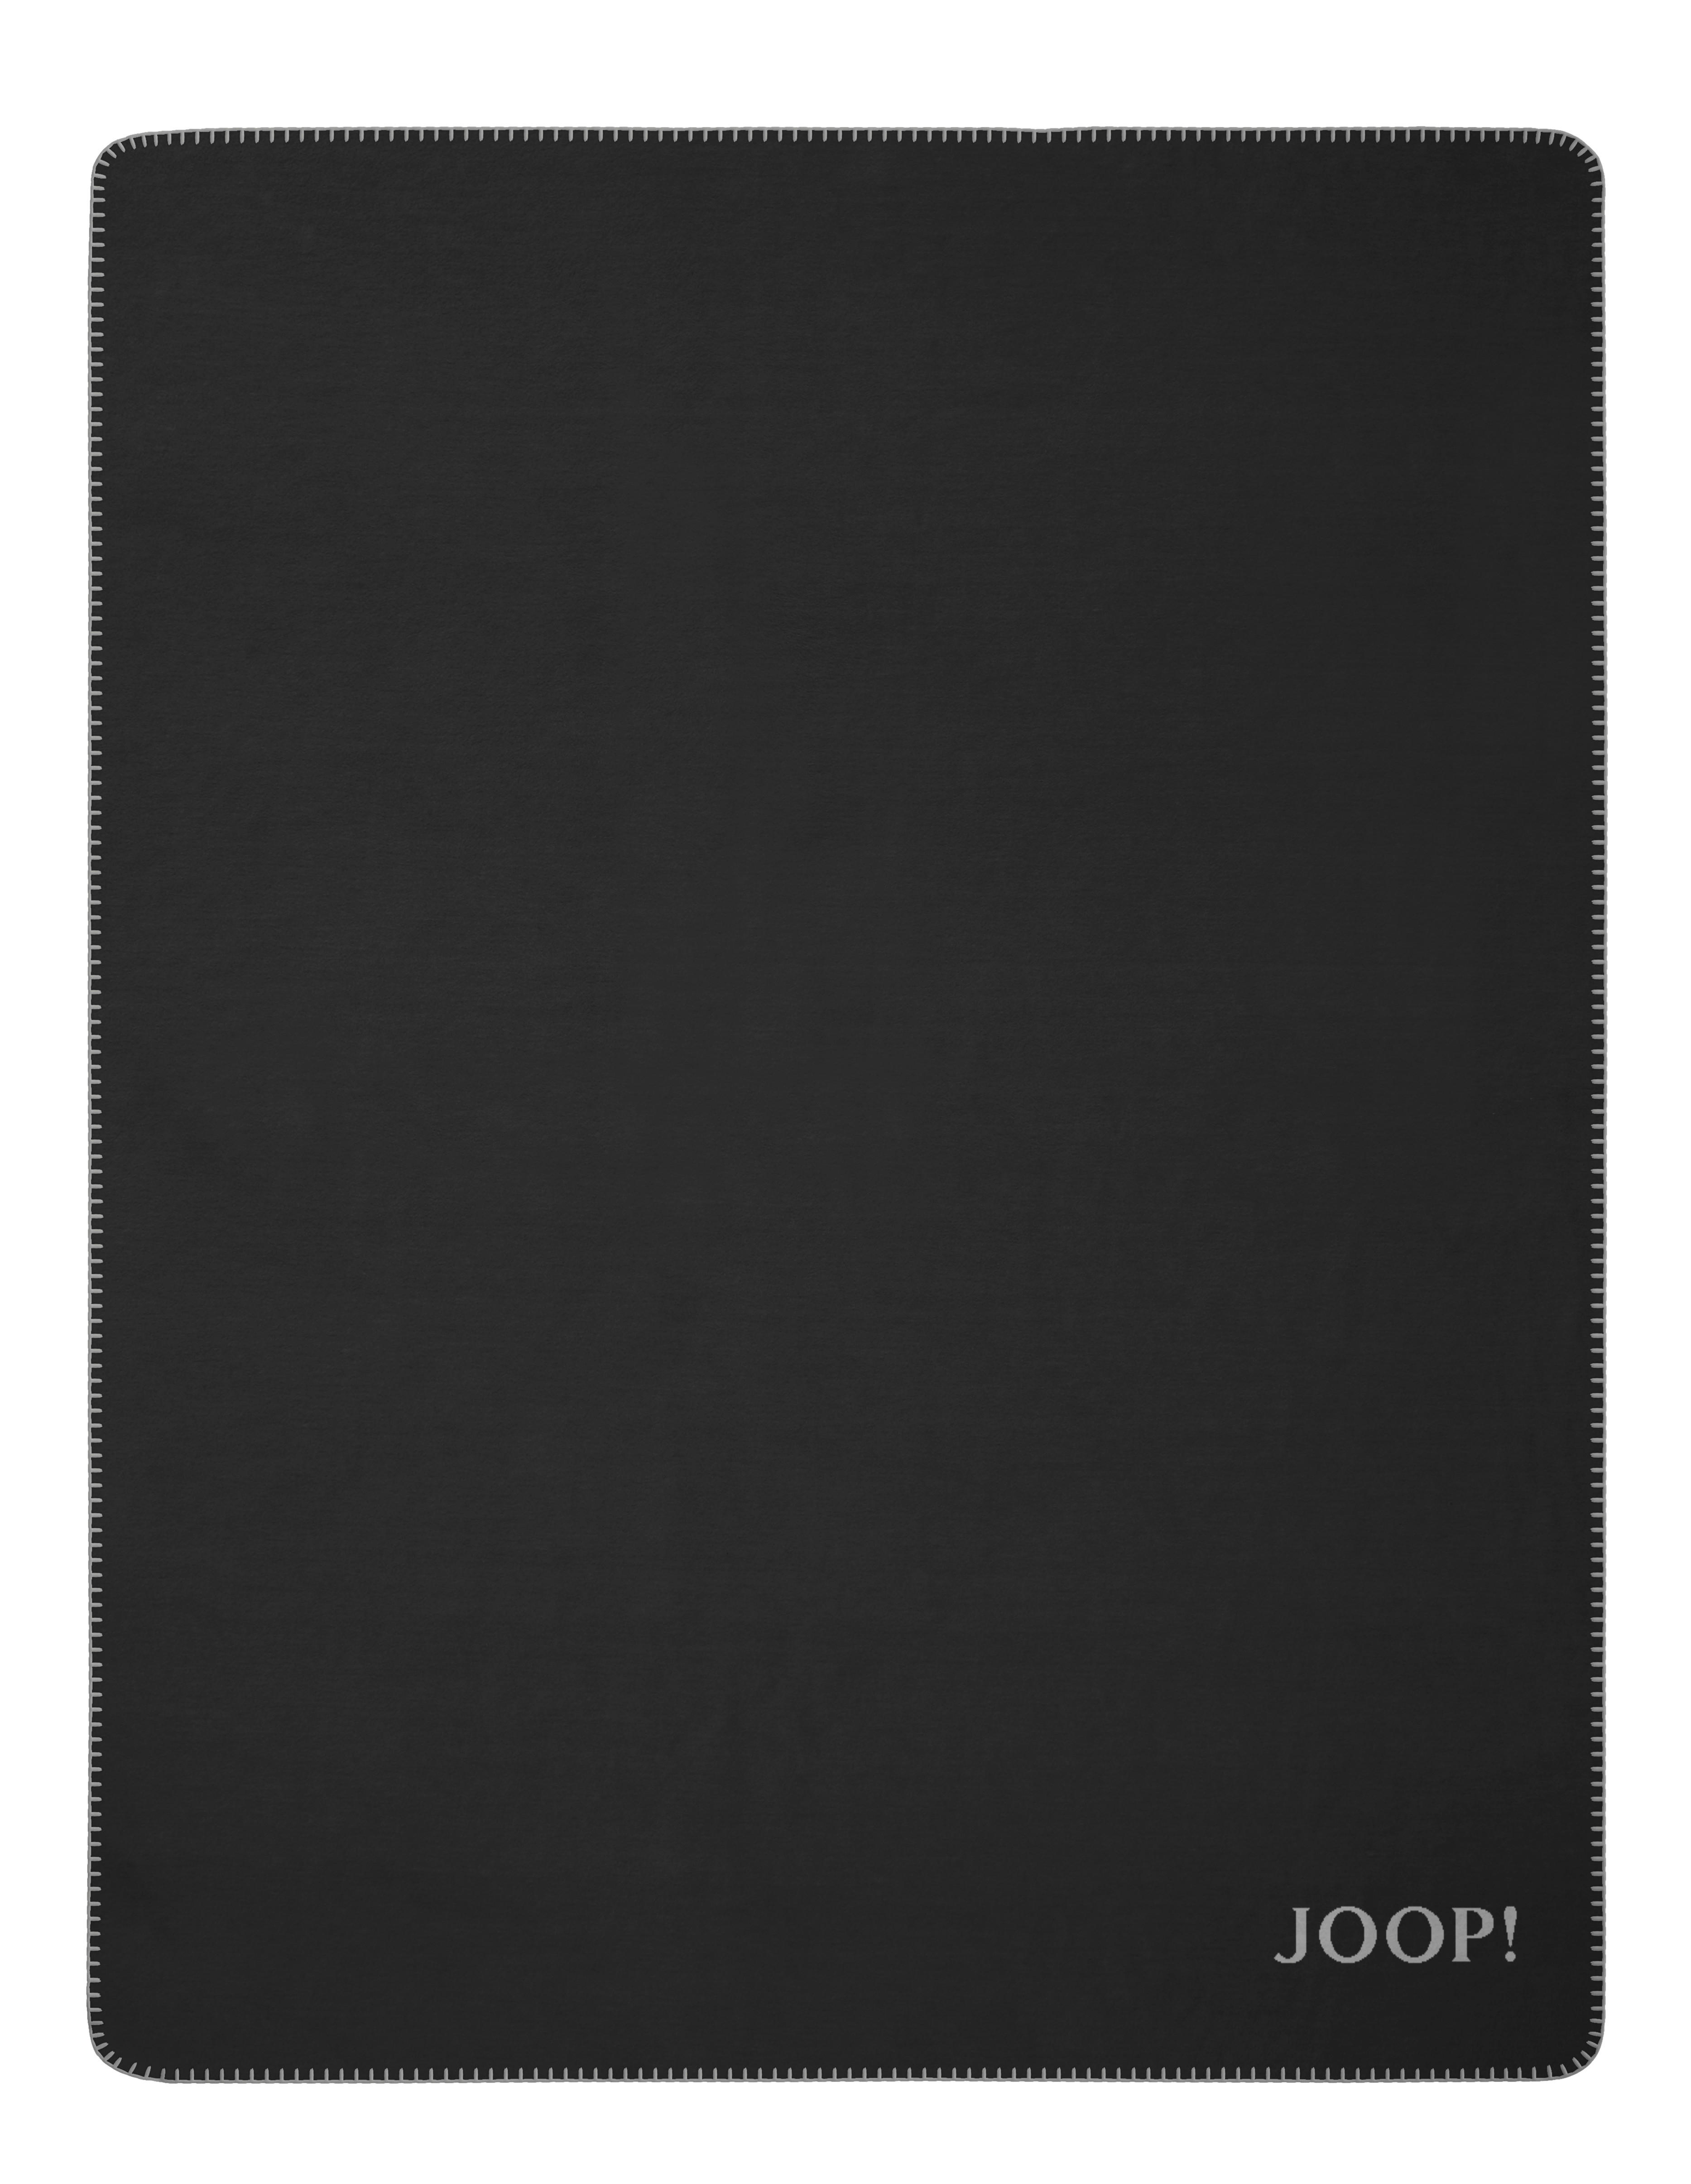 PLAID 150/200 cm  - Anthrazit/Grau, Design, Textil (150/200cm) - Joop!